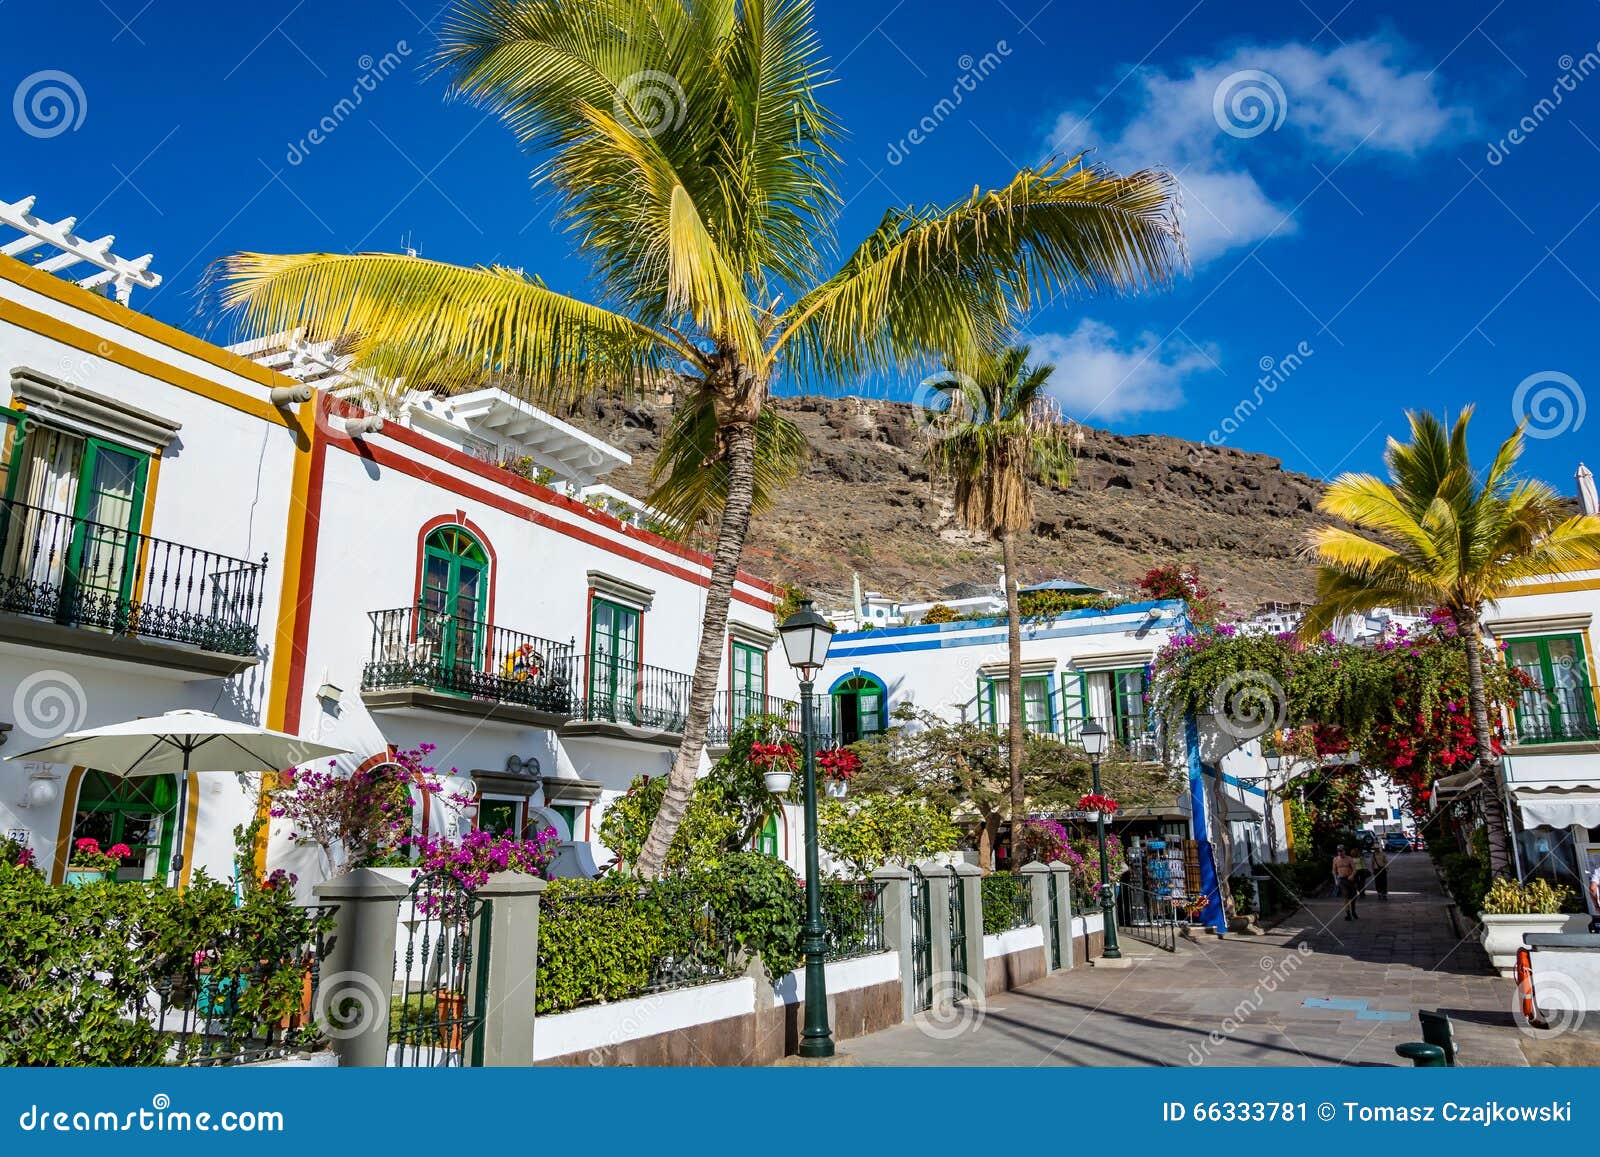 puerto de mogan, a beautiful, romantic town on gran canaria, spain